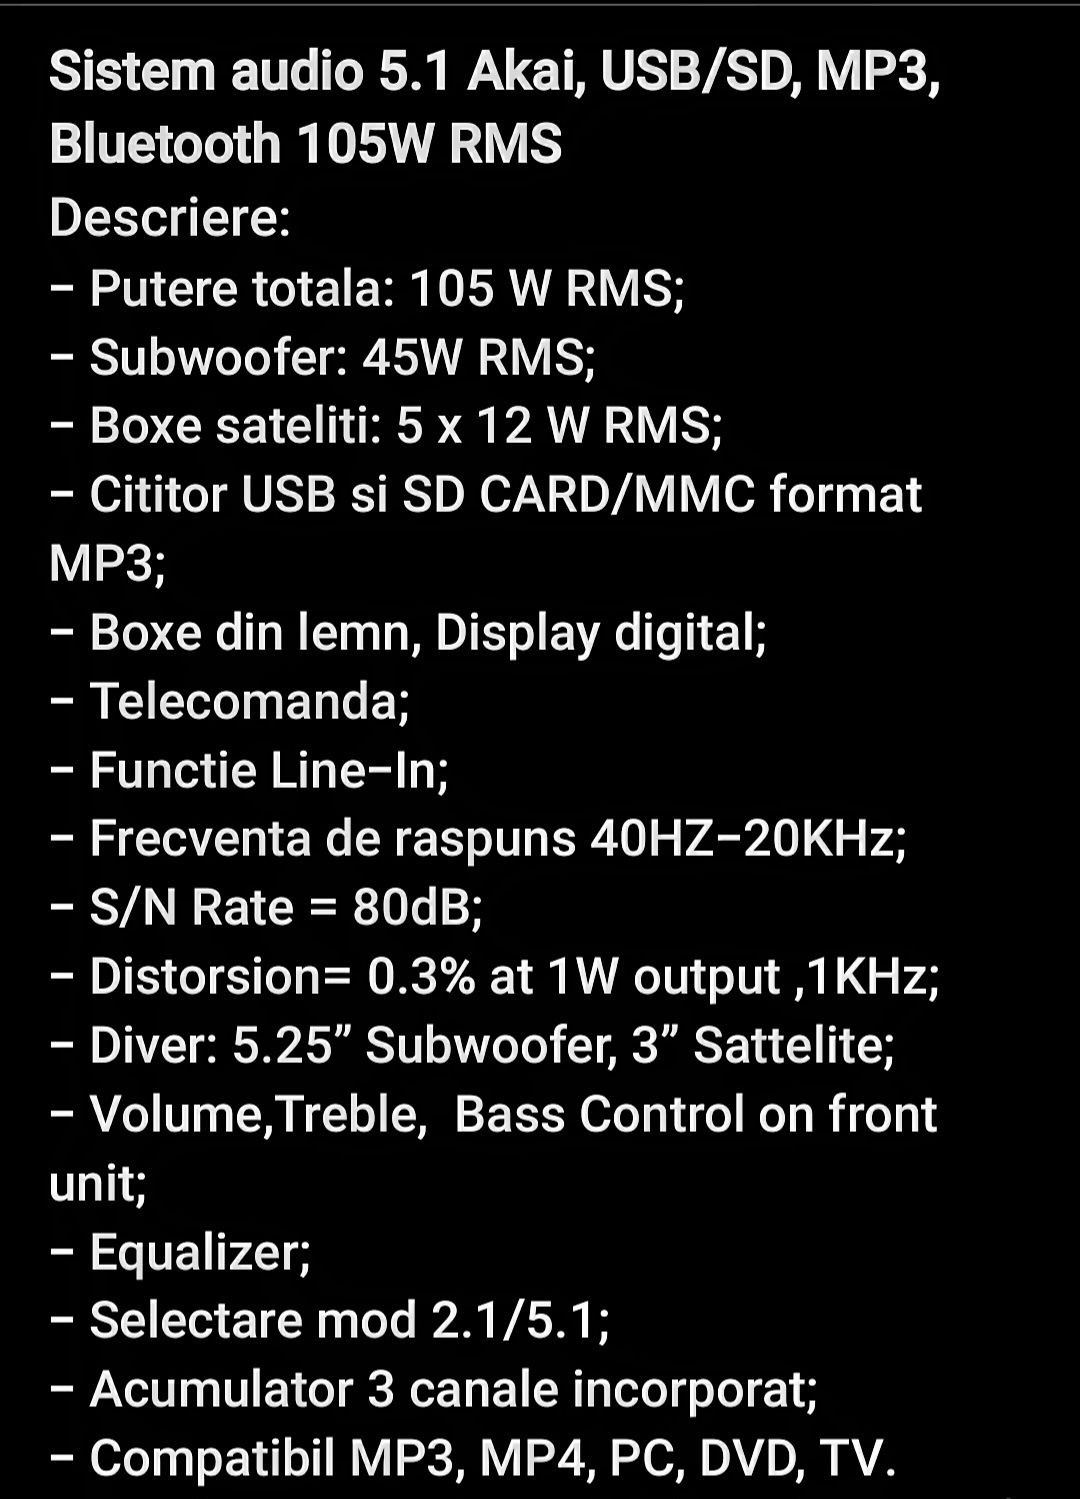 Sistem audio 5.1 Akai, USB/SD, MP3, Bluetooth, 105W RMS.